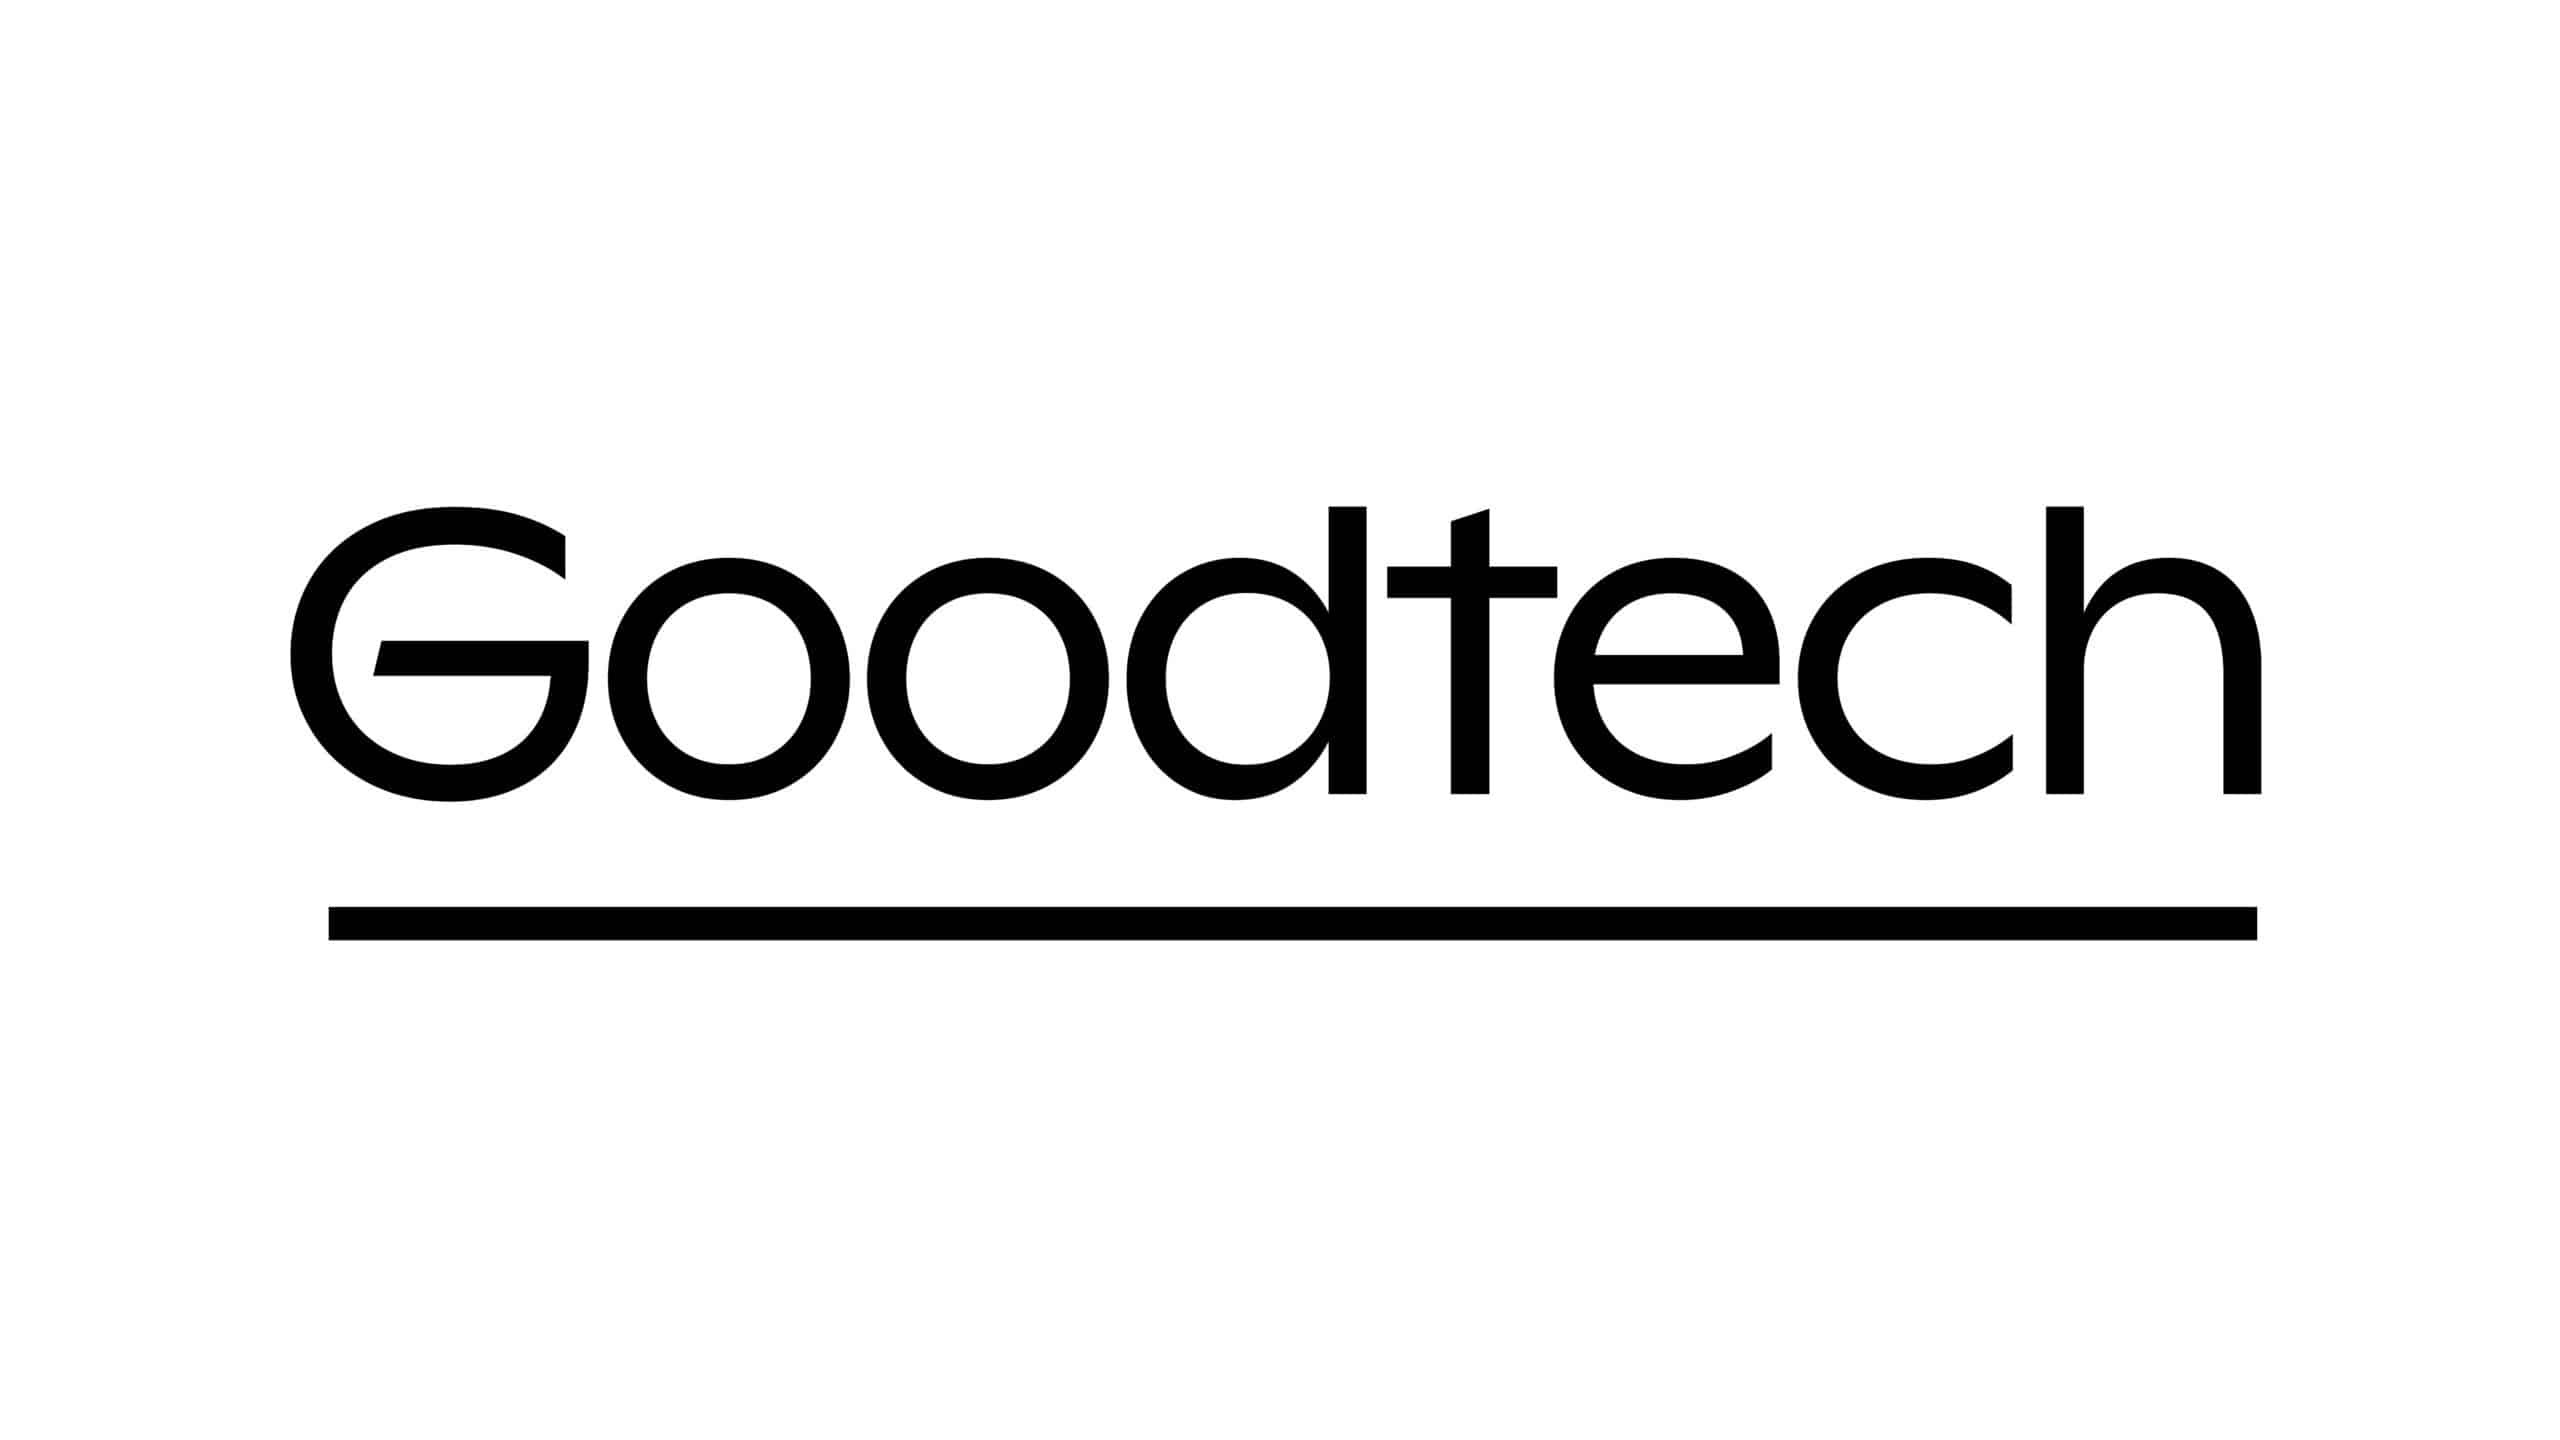 Goodtech logo black 01 scaled